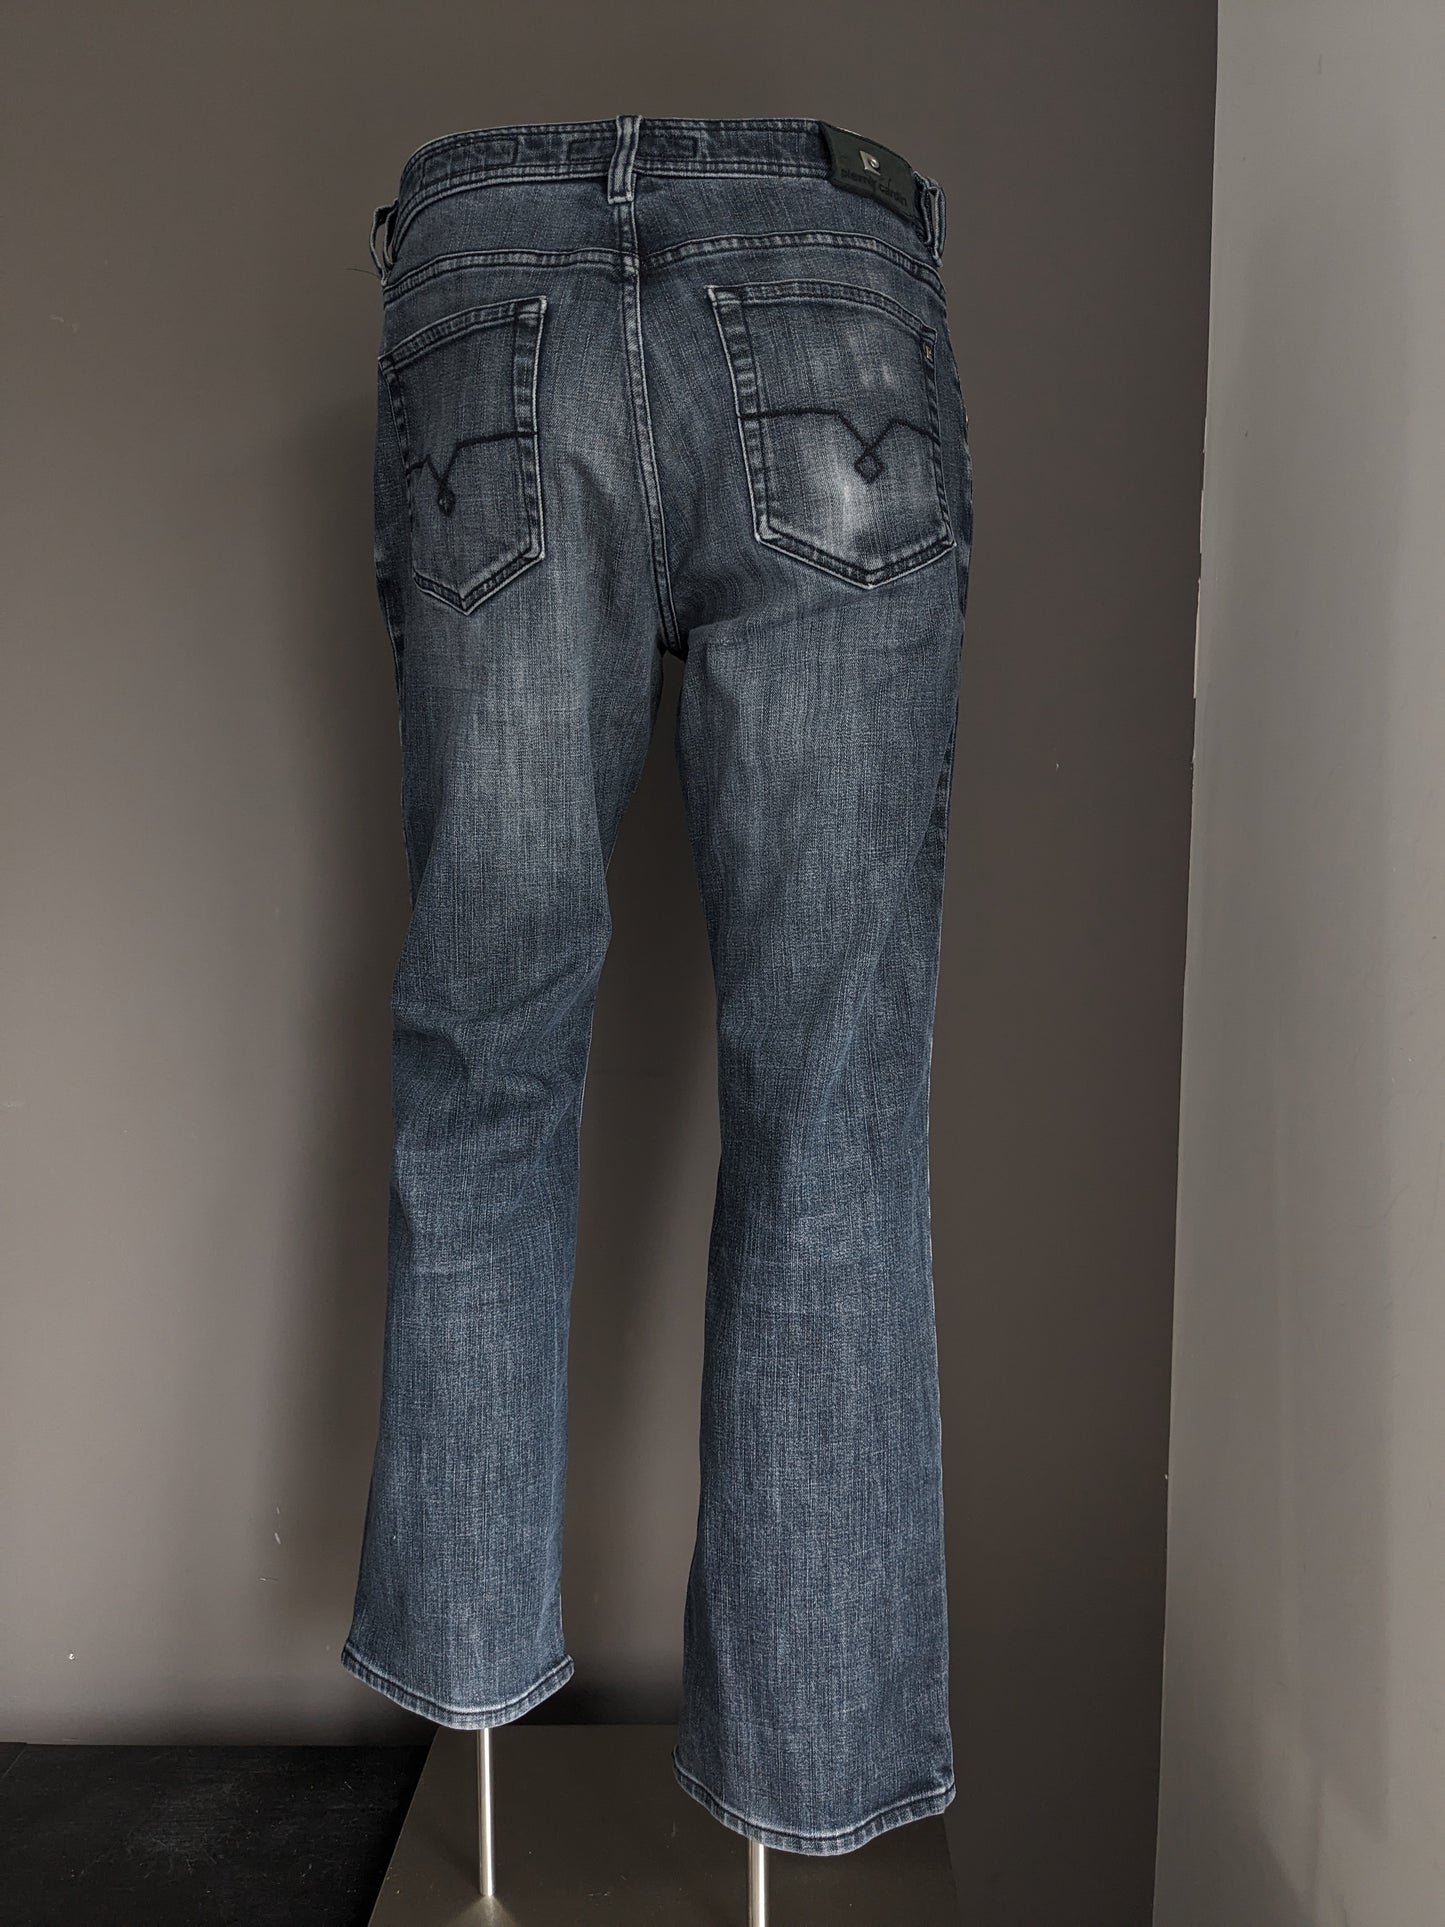 Pierre Cardin Jeans. Black gray colored. Size W33 - L30. Type mod Deauville.